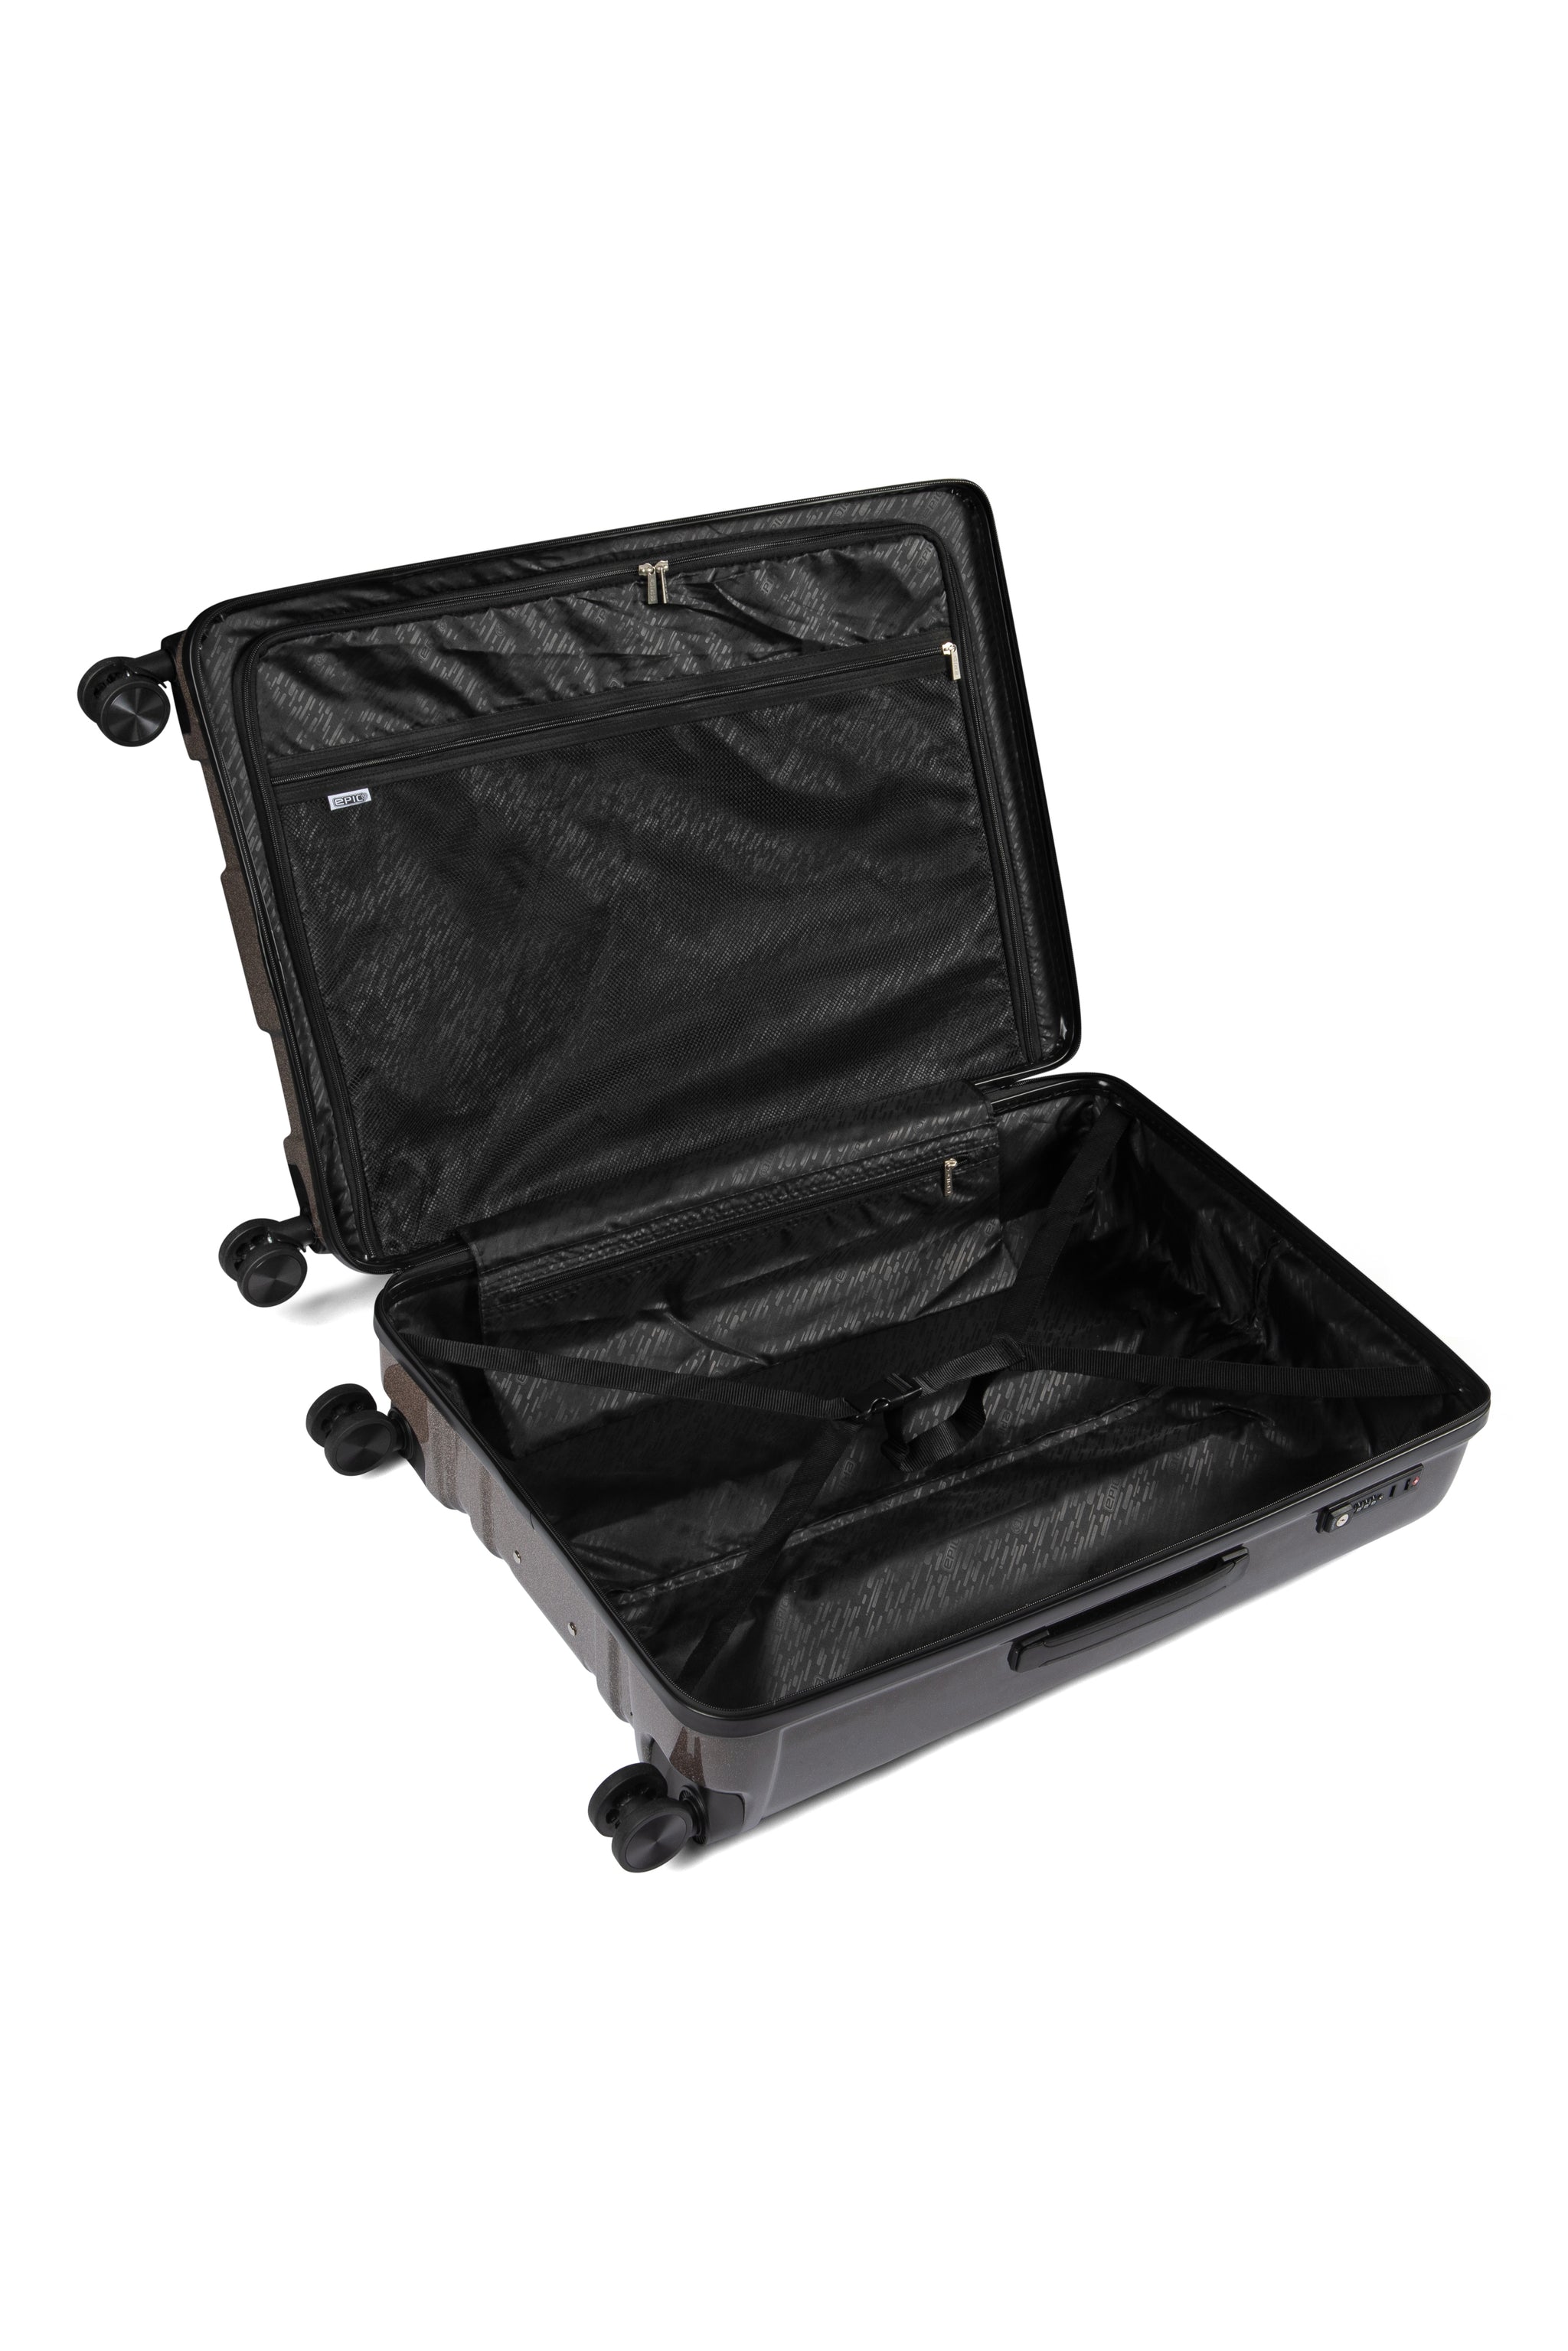 Epic Crate Reflex Evo Stor Koffert Charcoal black